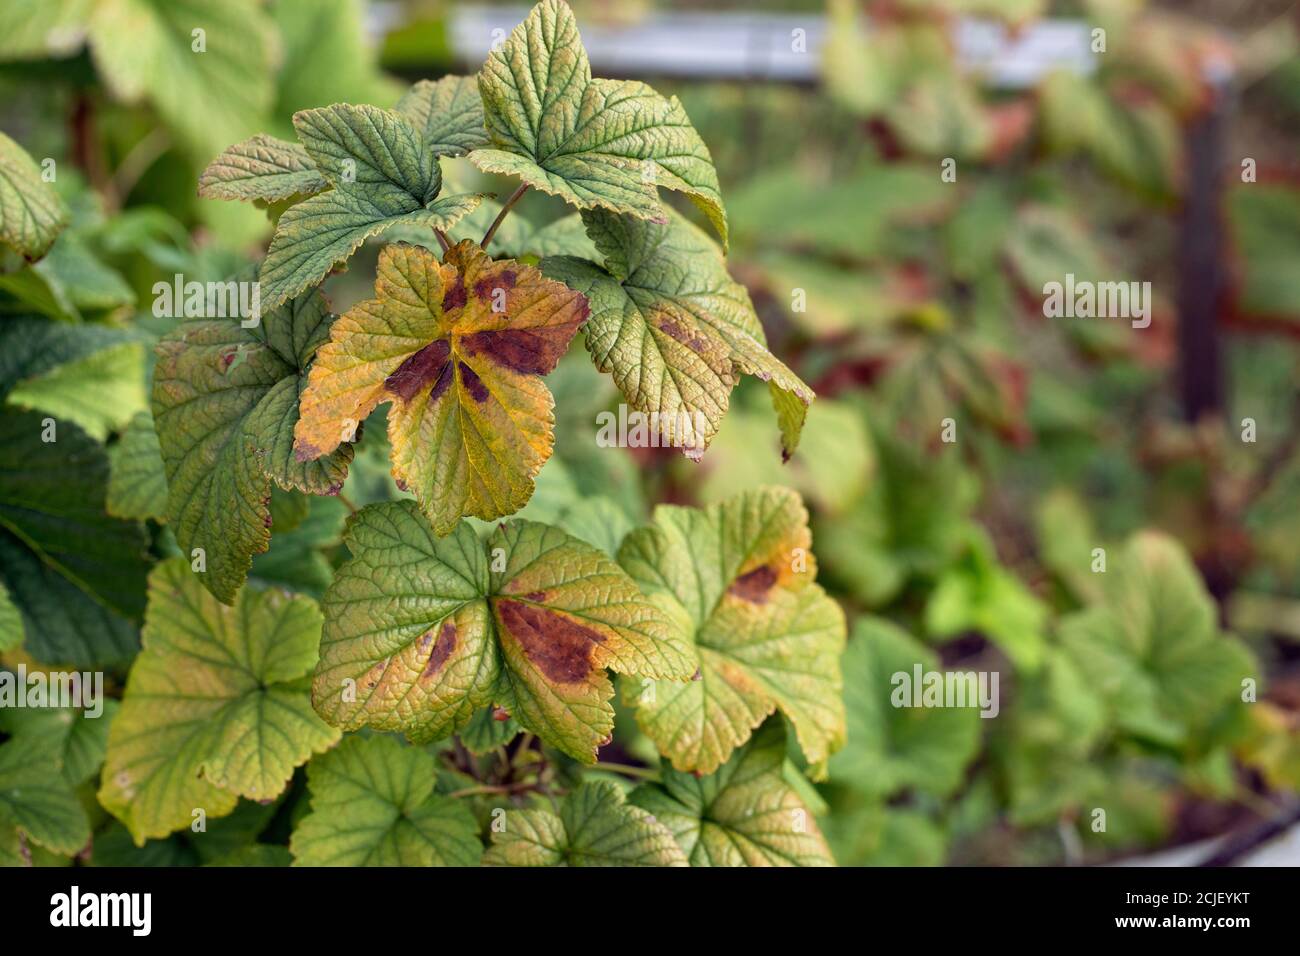 blackcurrant leaf damage as symptoms of fungal disease anthracnose Stock Photo